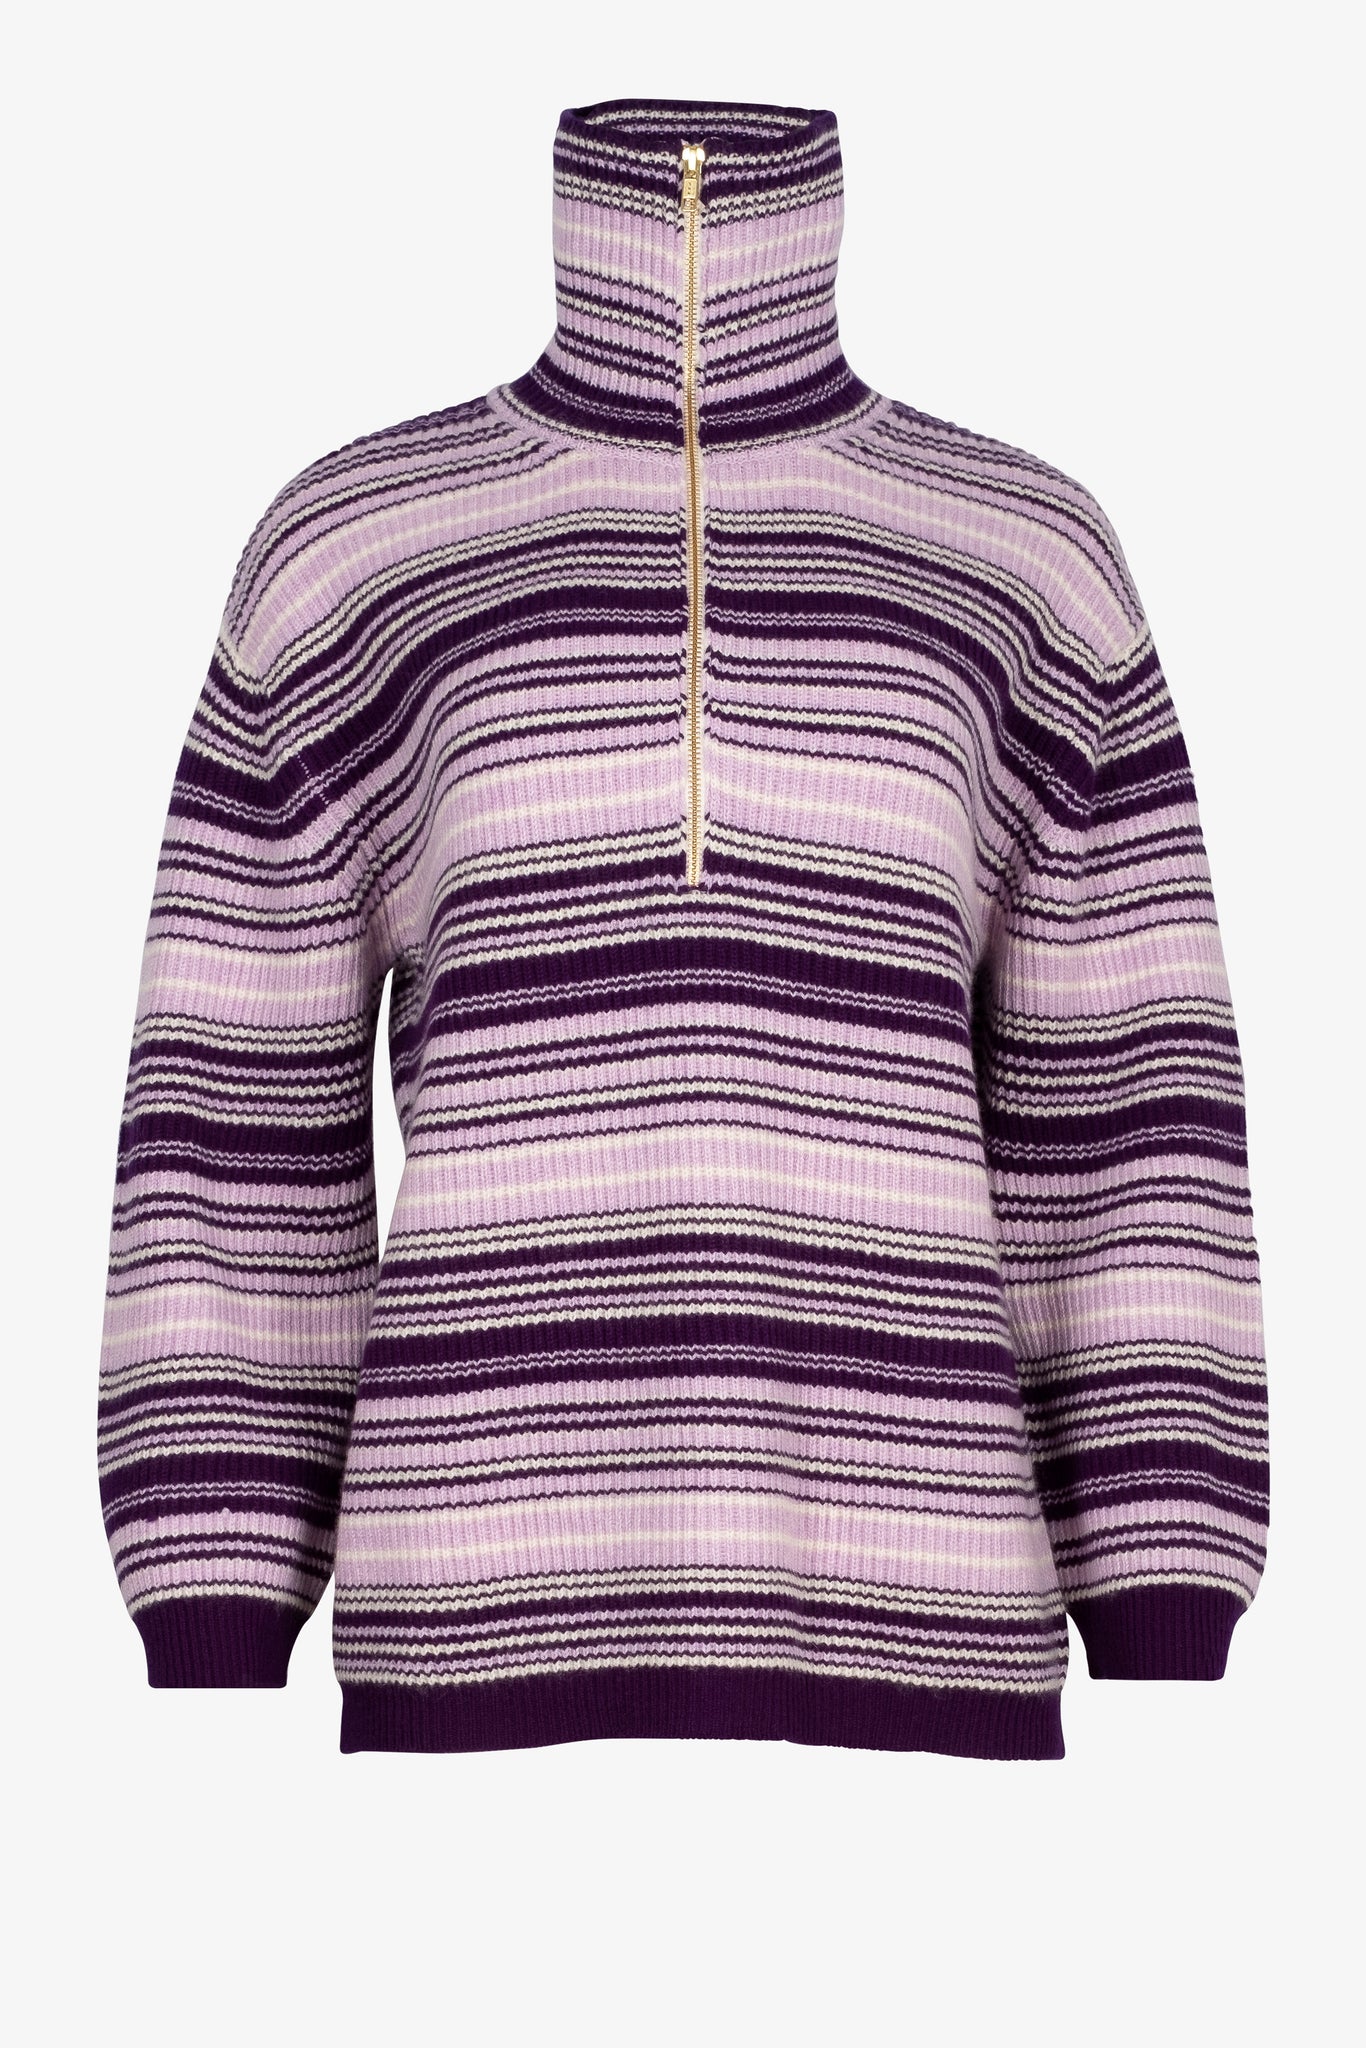 LUY zipped Sweater